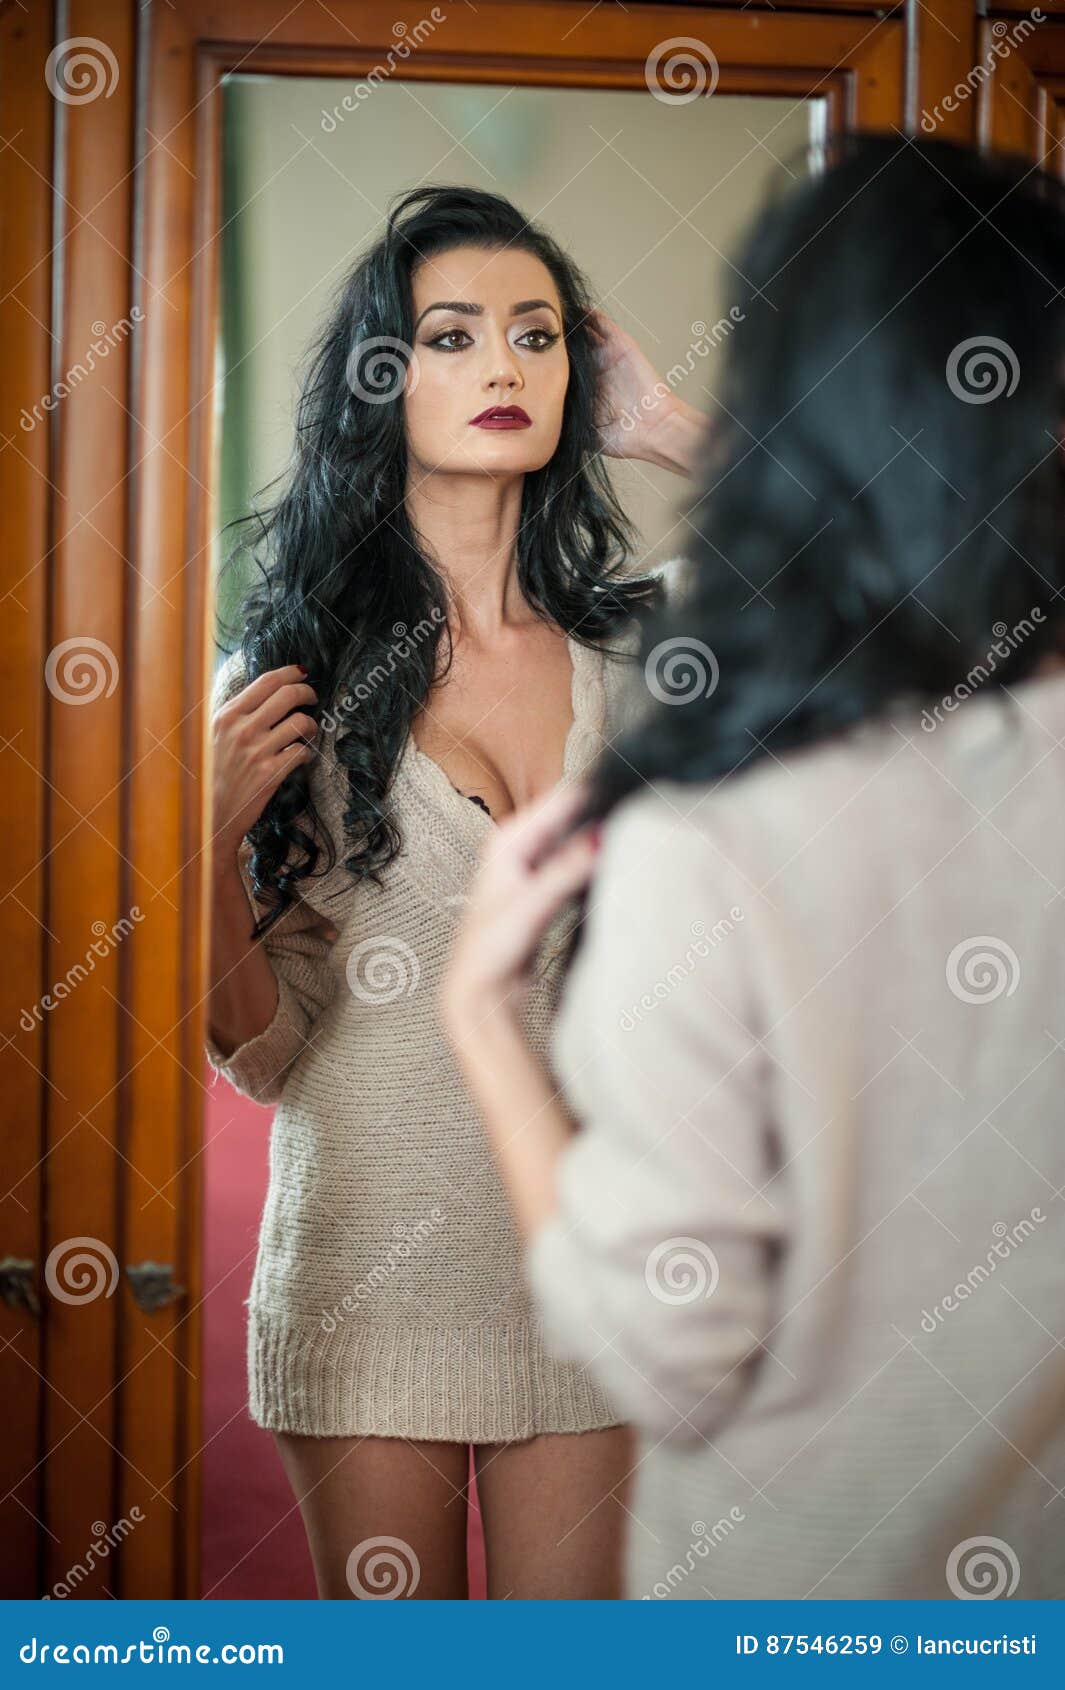 Сексуальная брюнетка нагая перед зеркалом